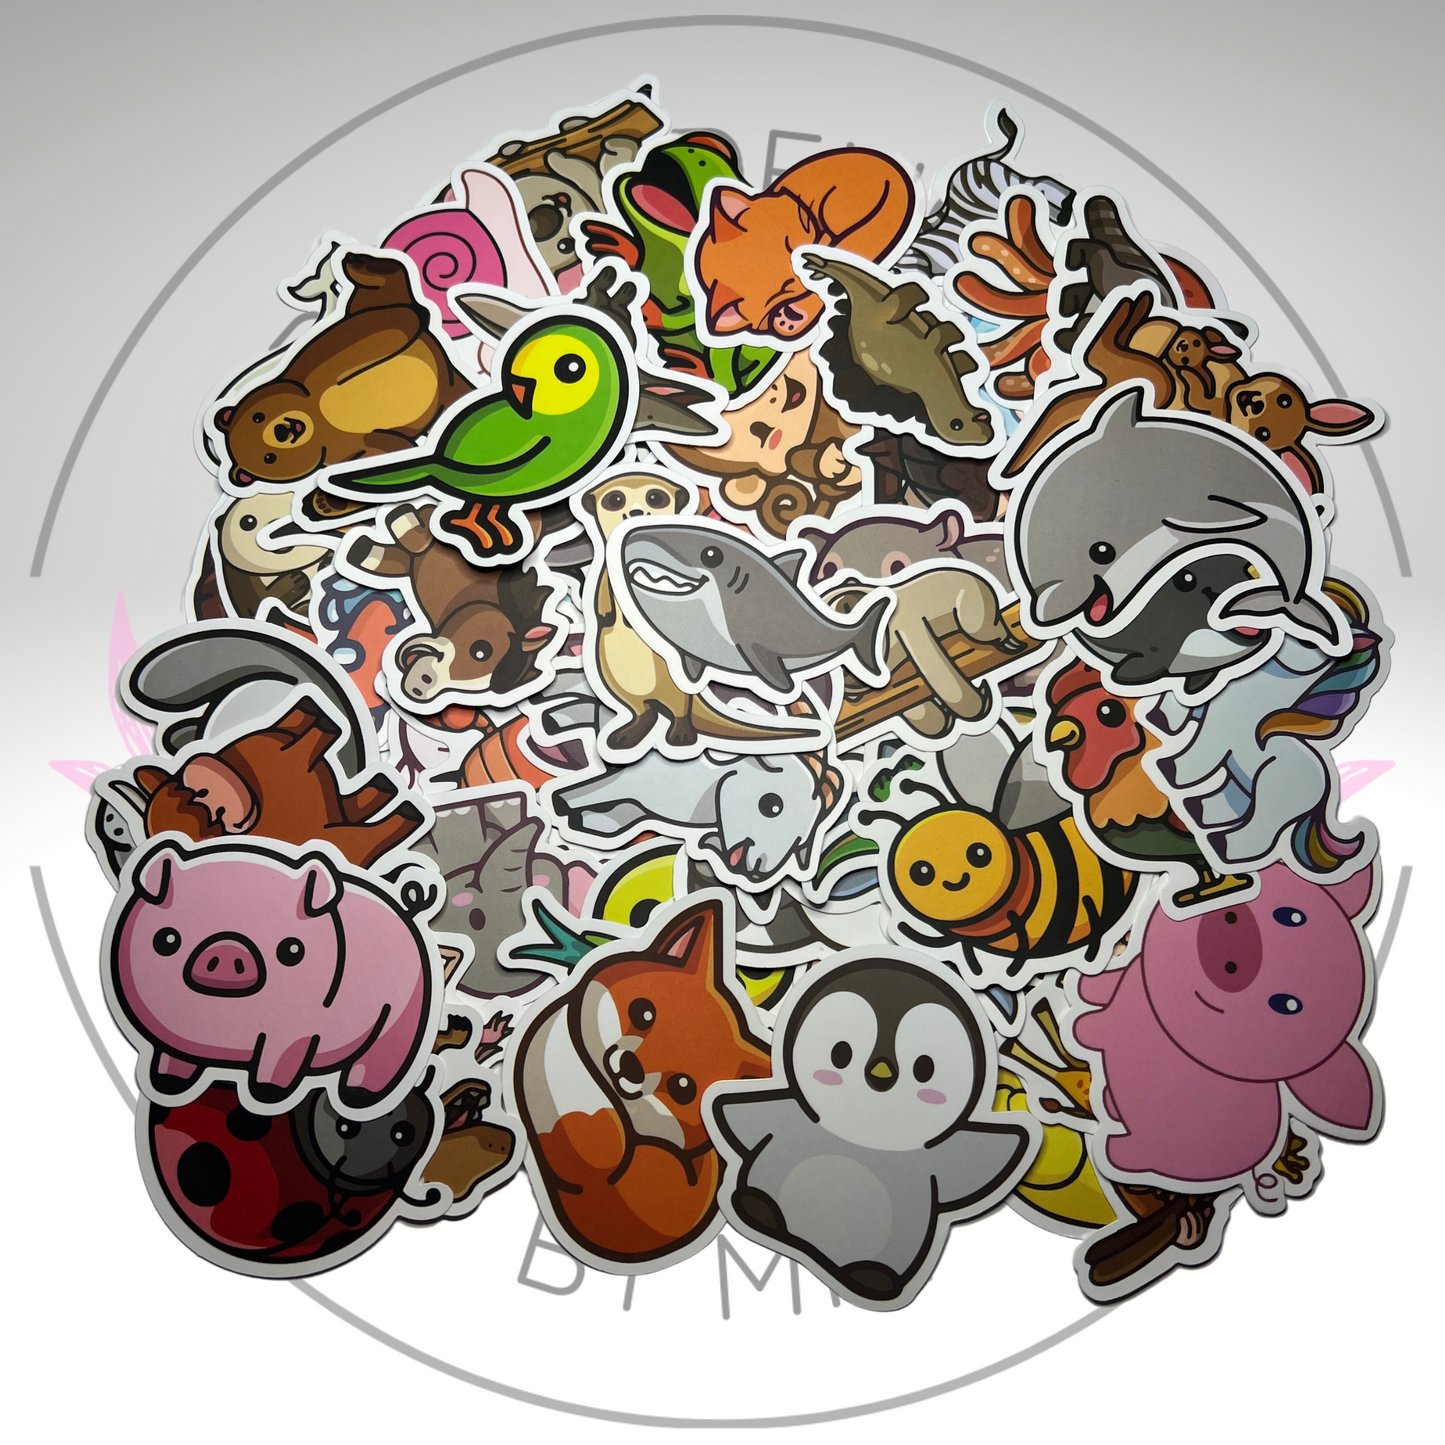 Animal Sticker Mystery Pack